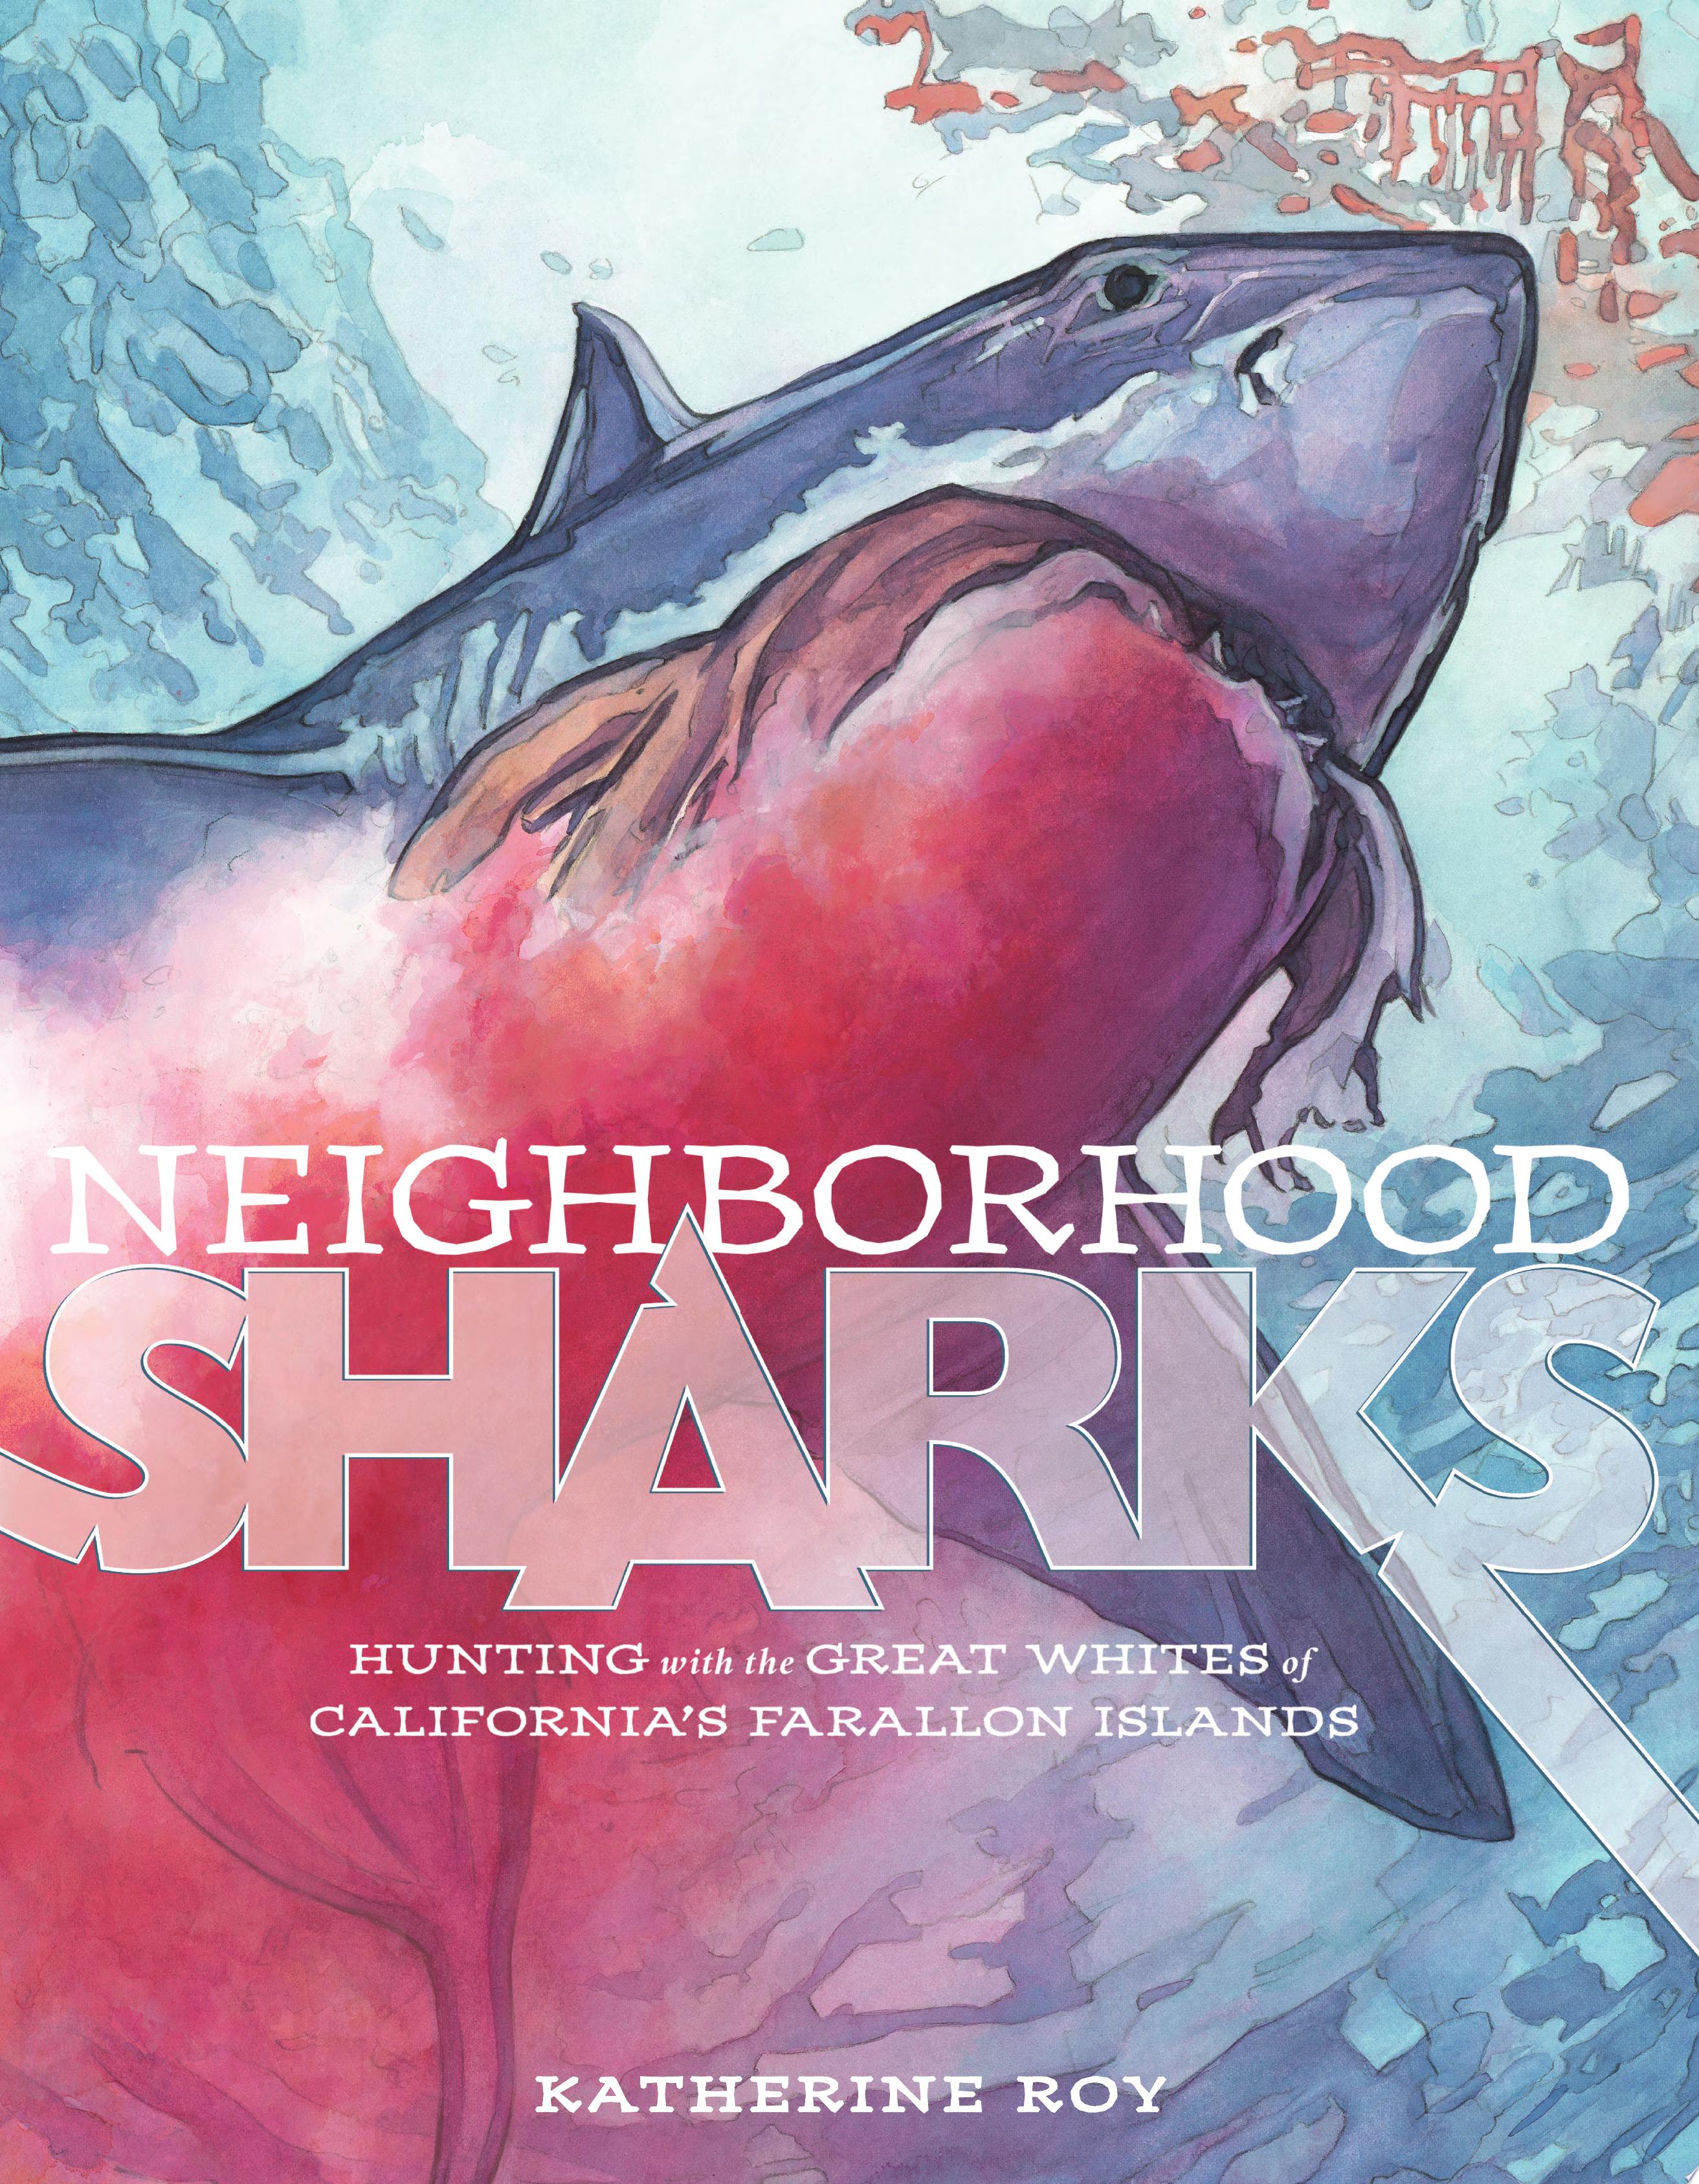 Image for "Neighborhood Sharks"